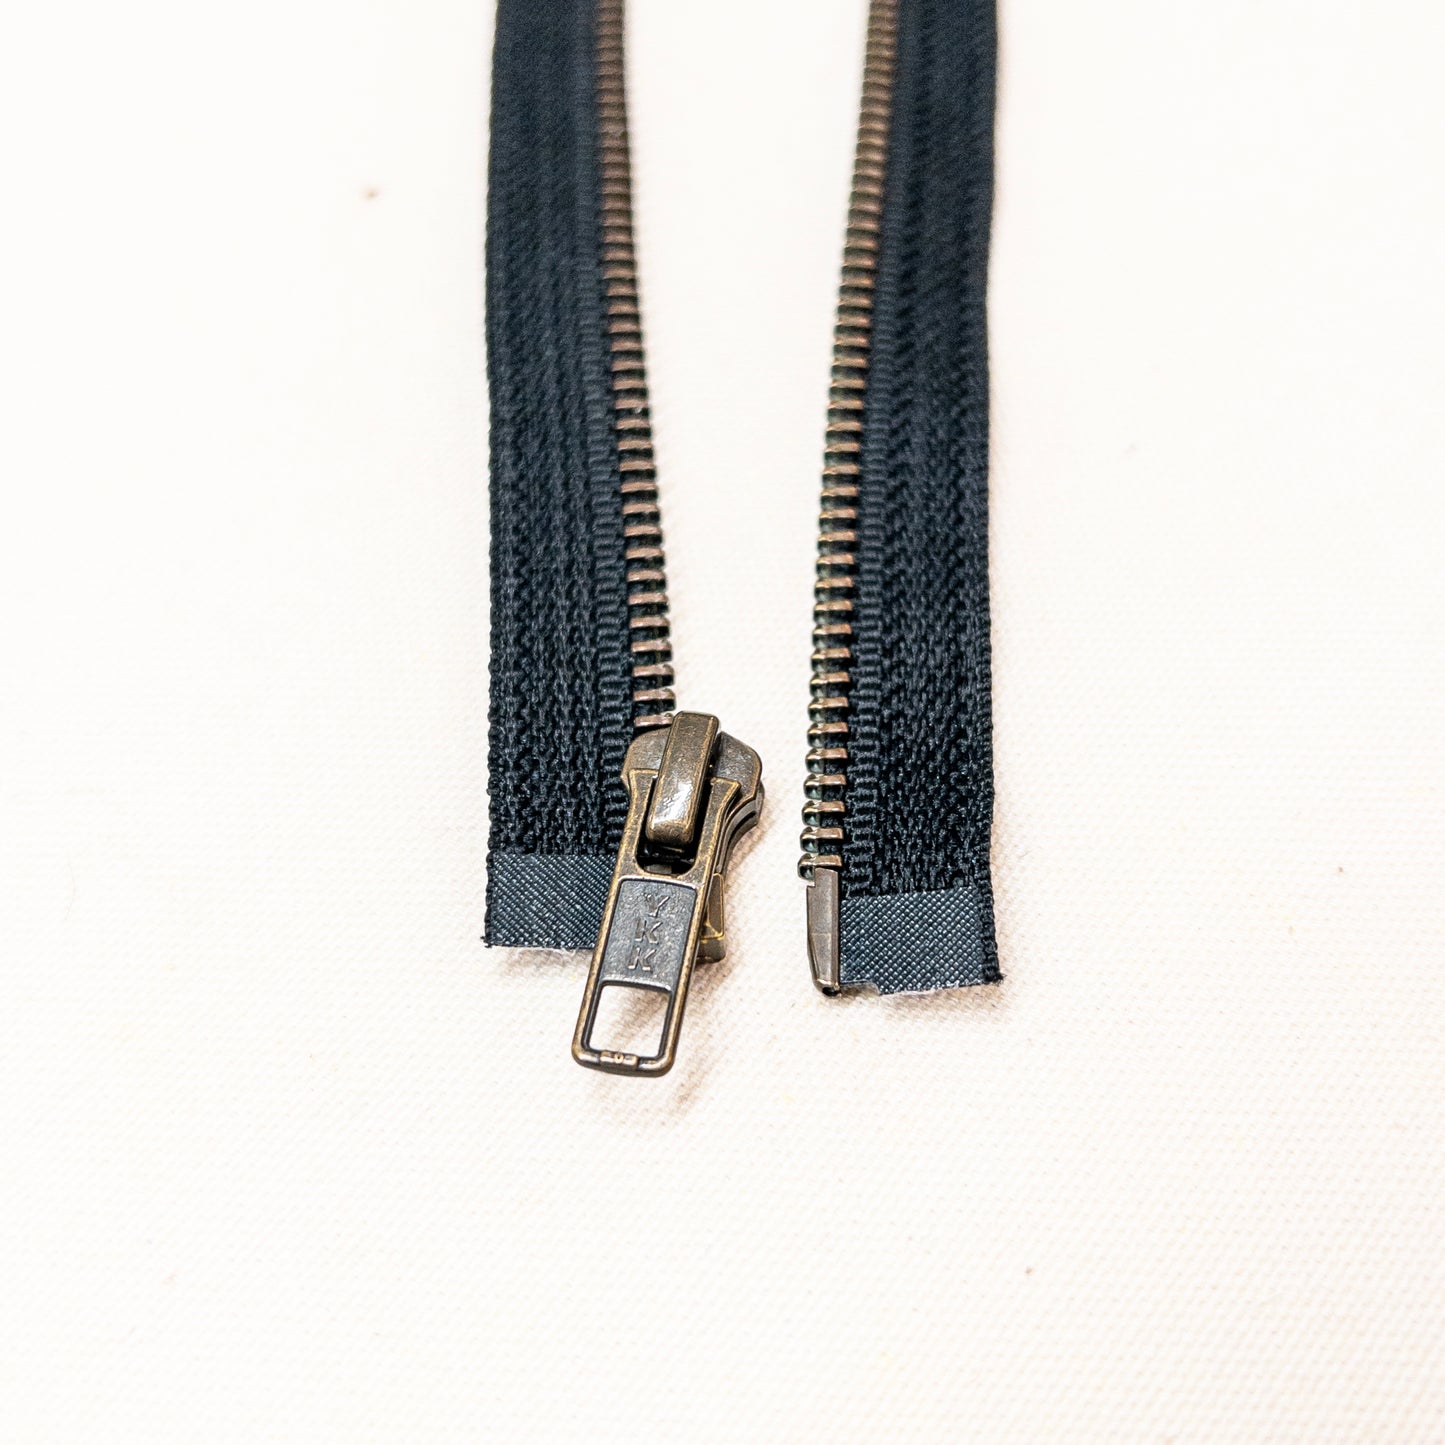 30" Separating Zipper in Antique Brass